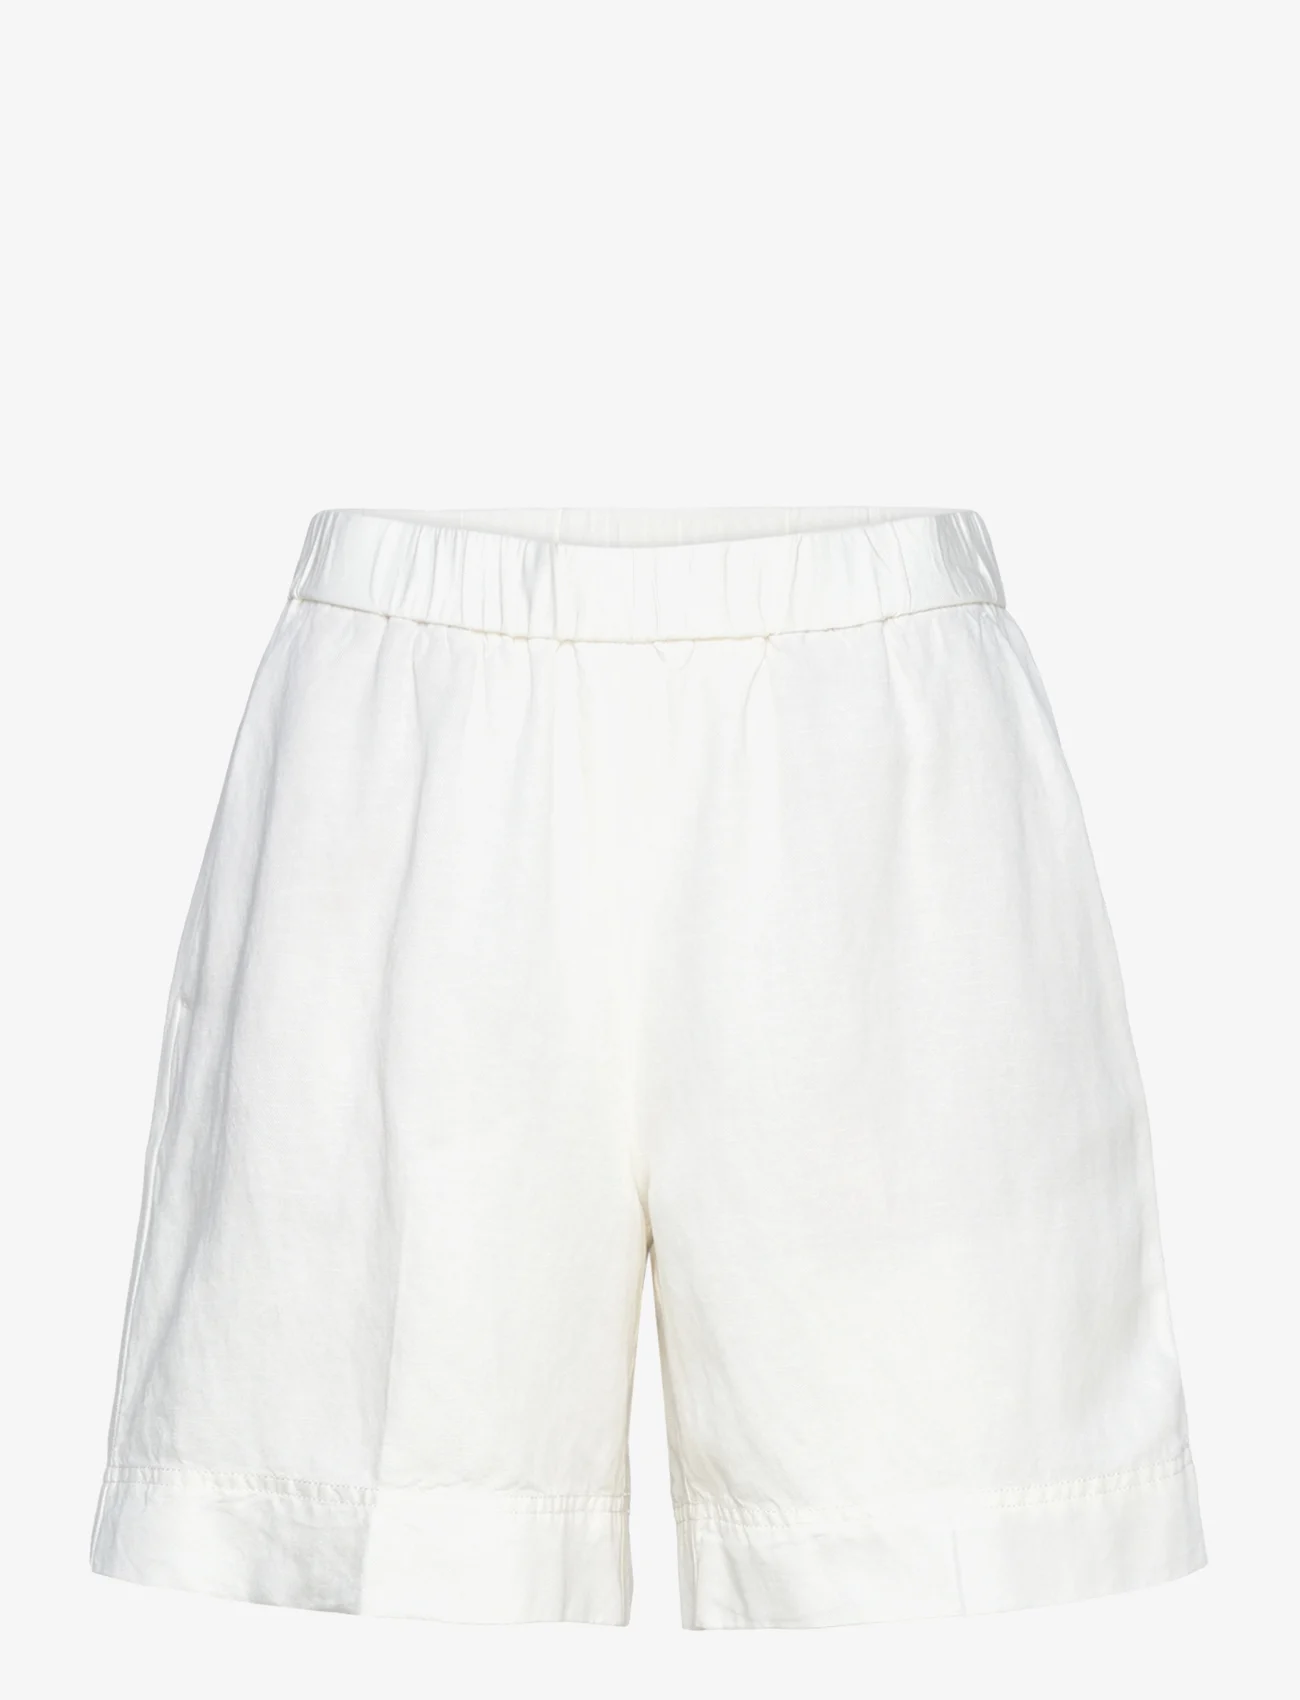 GANT - REL LINEN BLEND PULL ON SHORTS - chino shorts - eggshell - 0